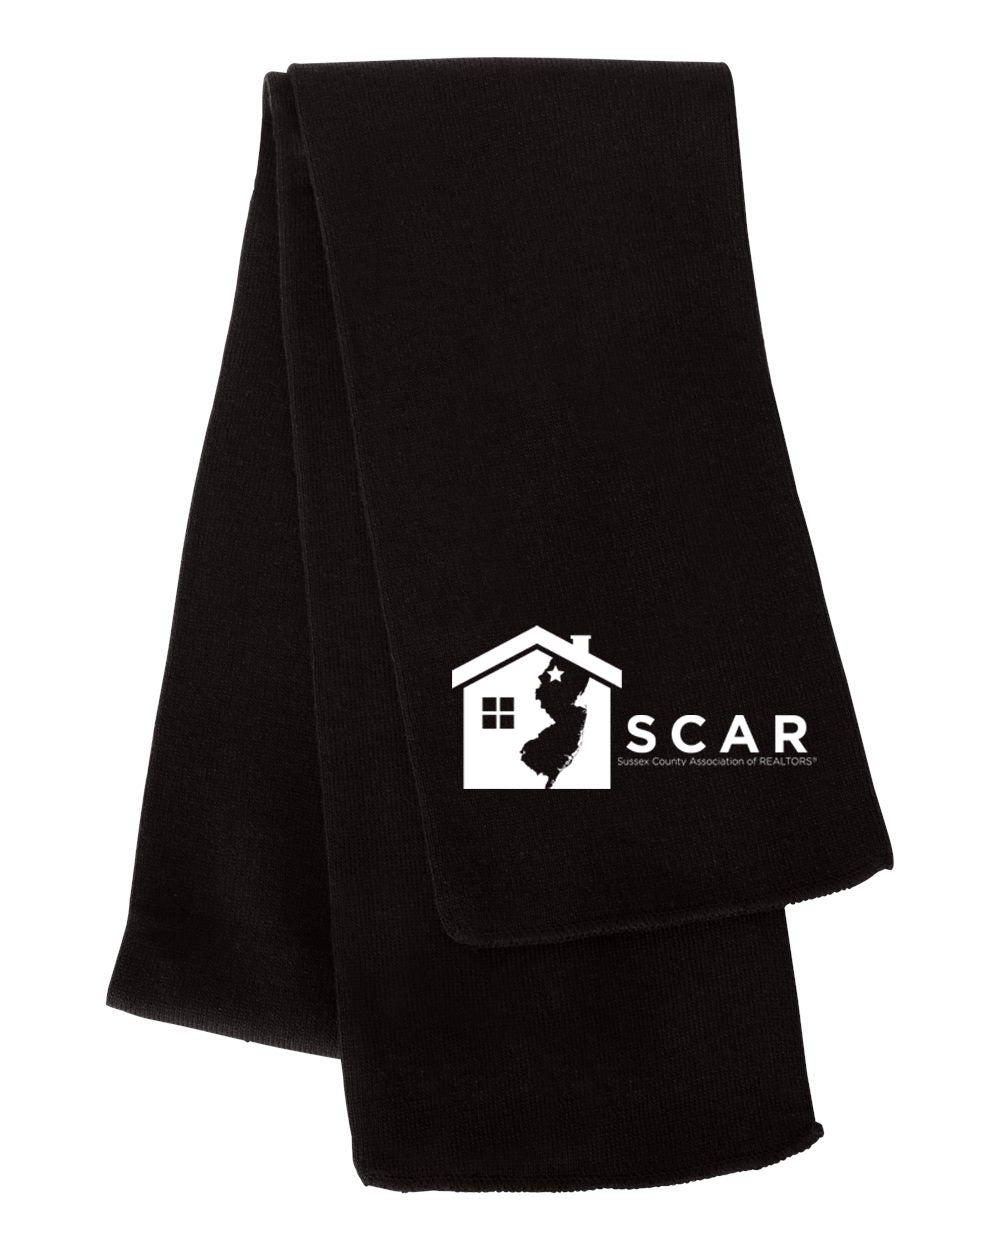 SCAR design 2 Scarf